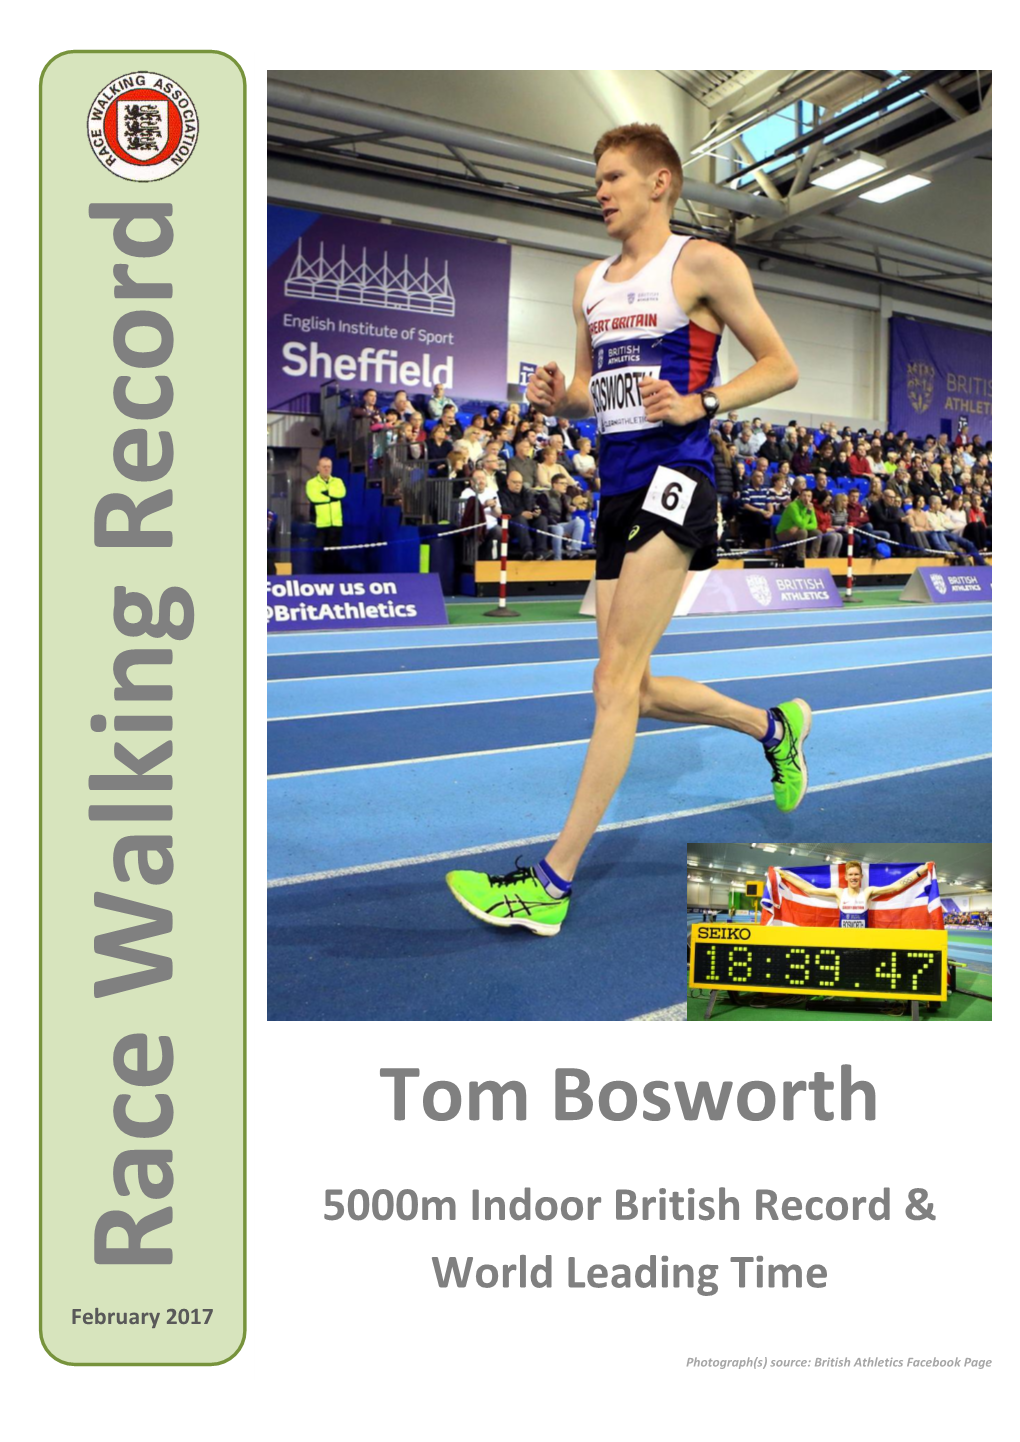 Tom Bosworth